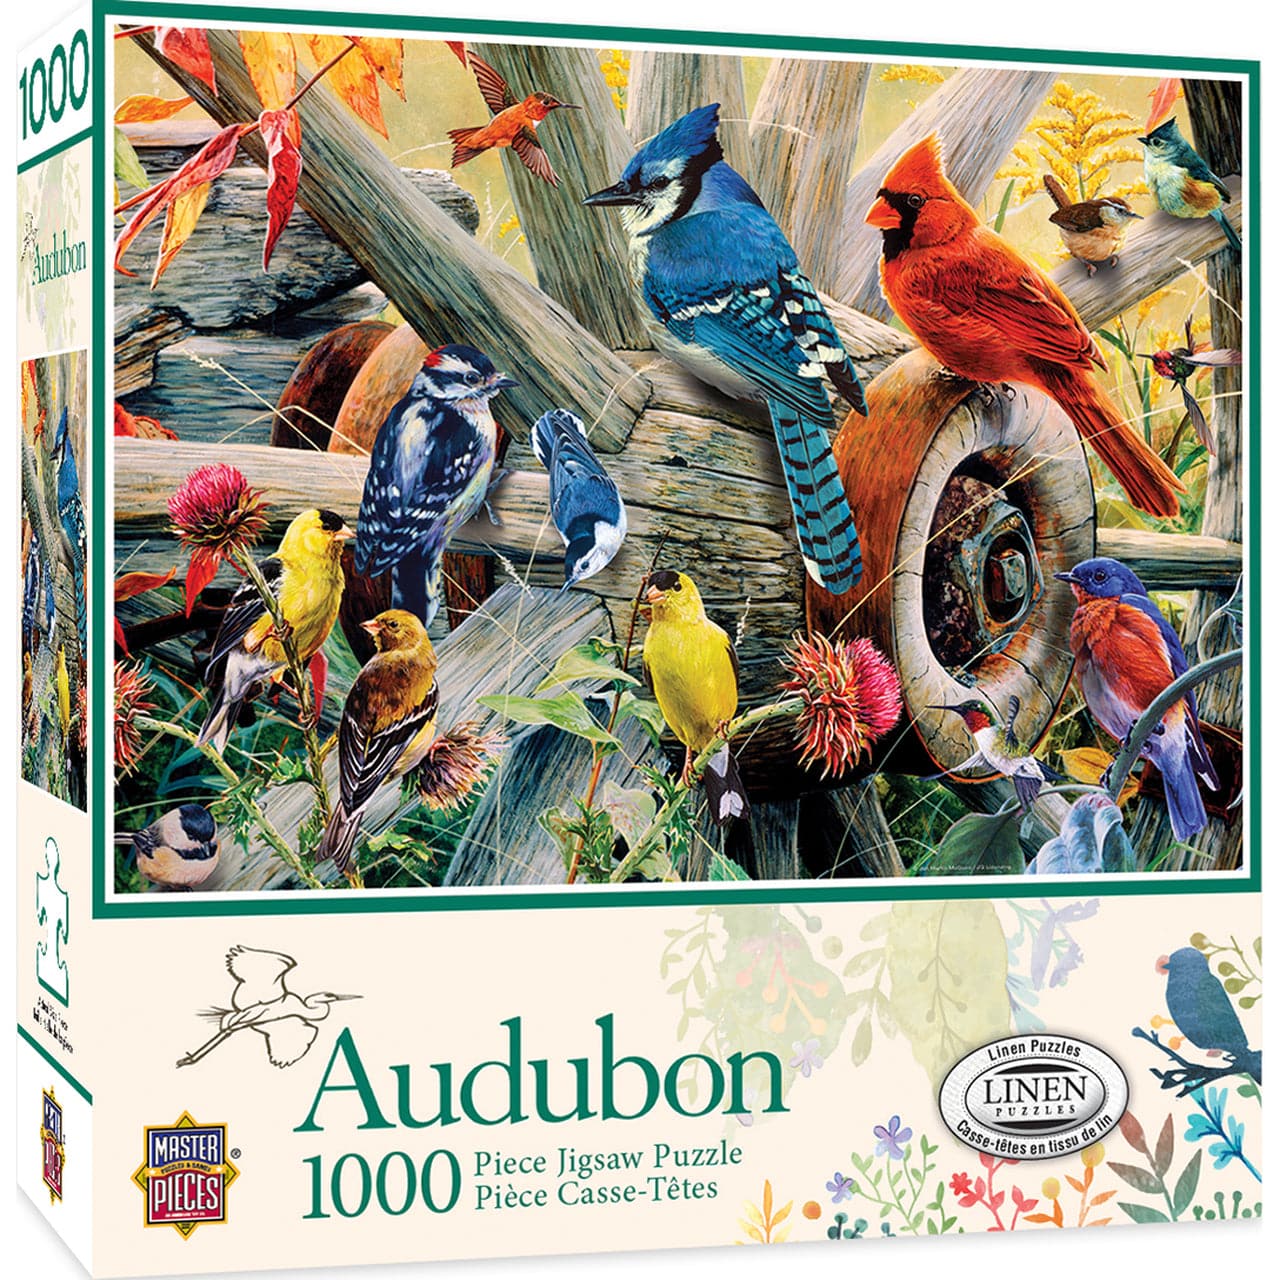 MasterPieces-Audubon - Backyard Birds - 1000 Piece Puzzle-31978-Legacy Toys